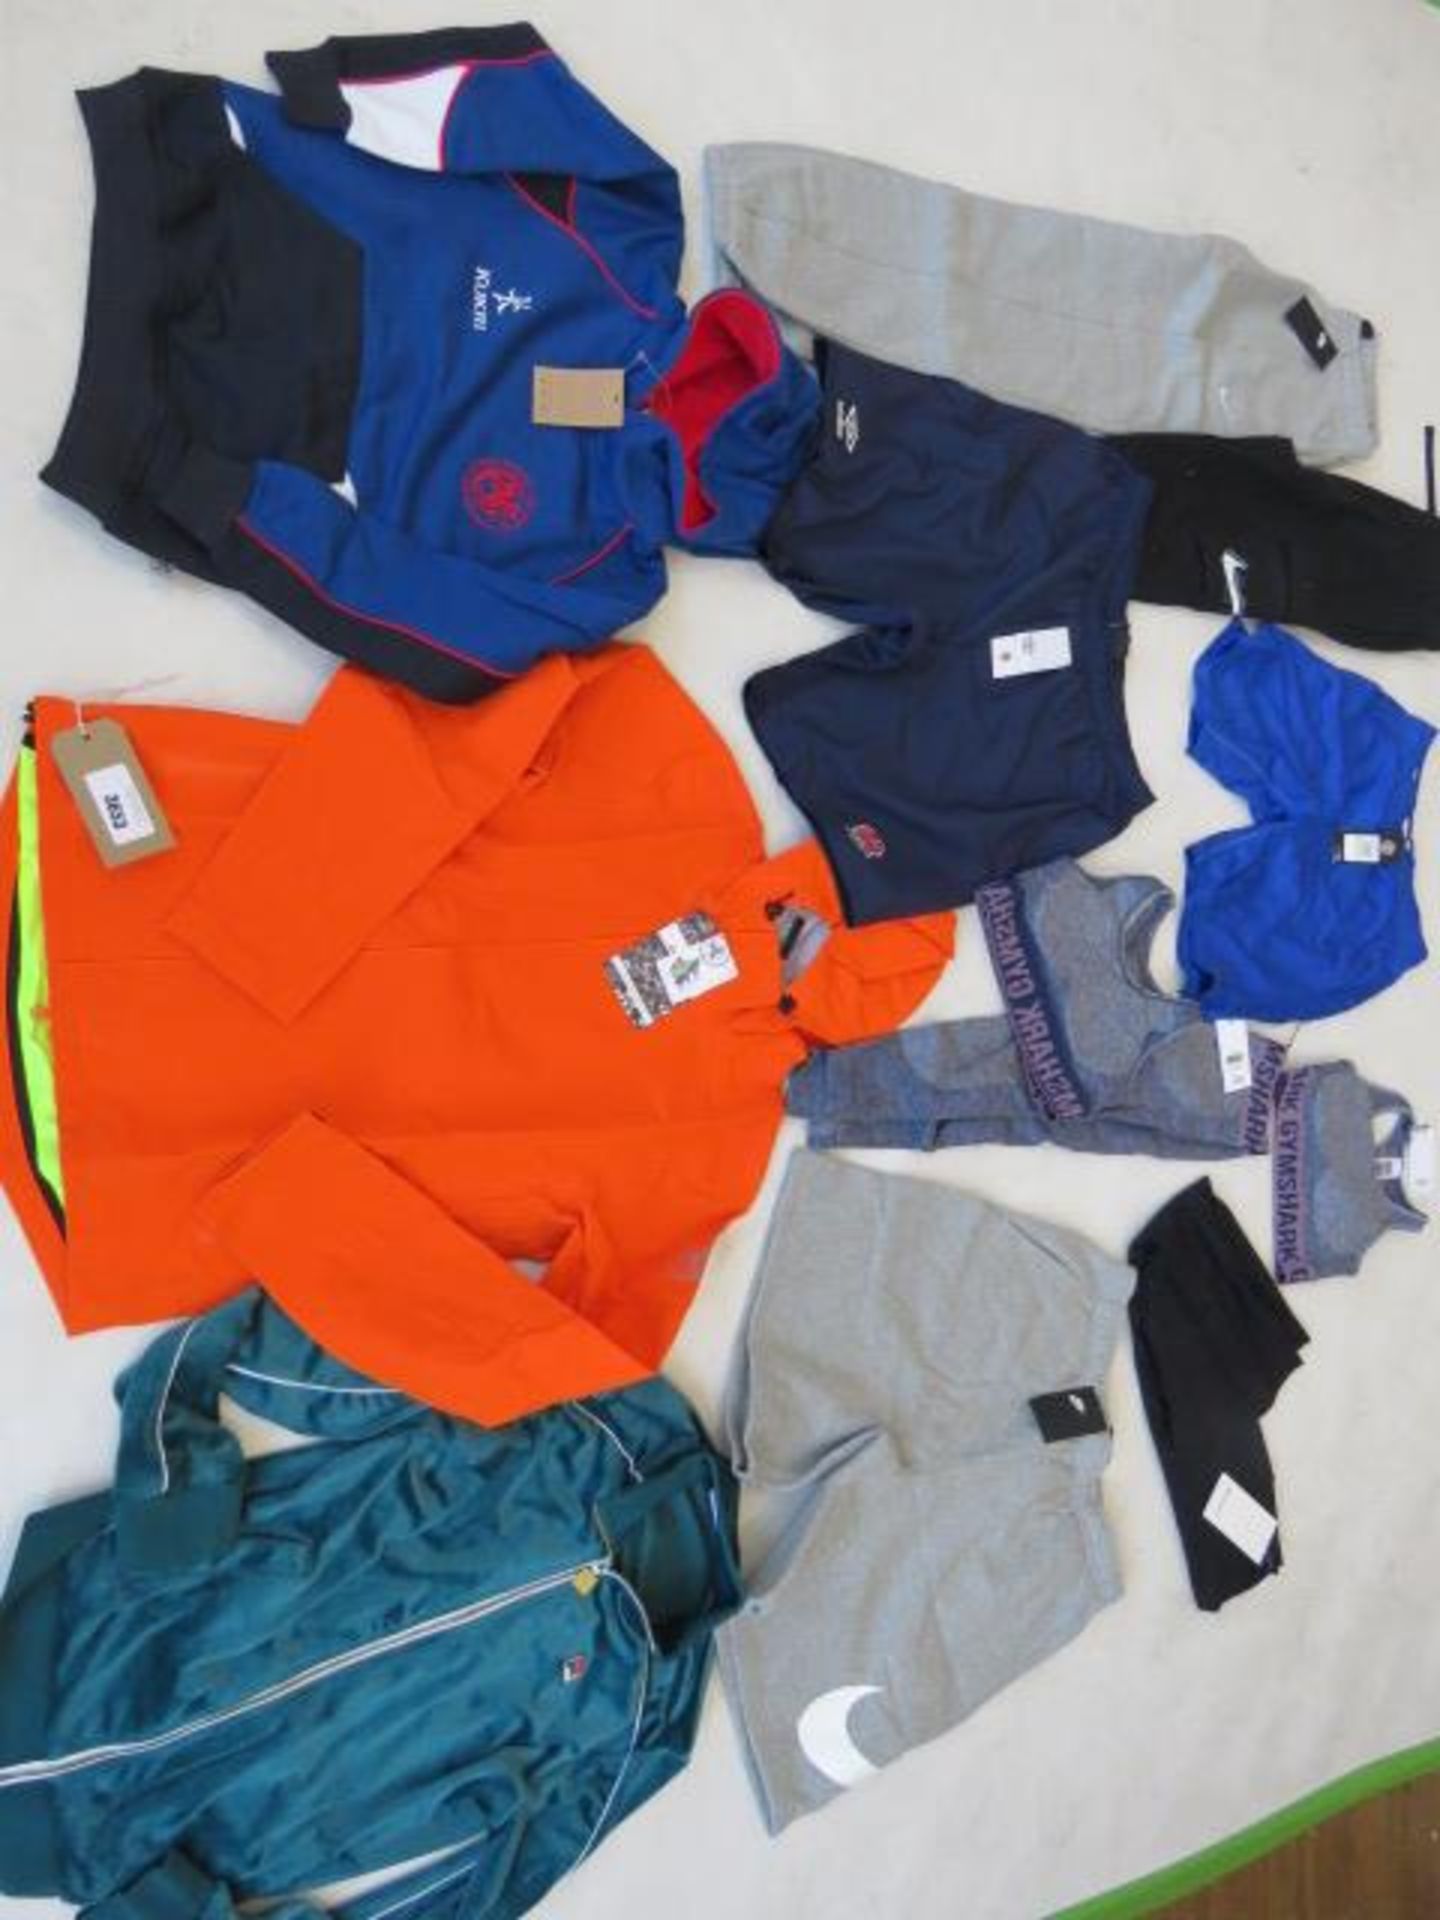 Selection of sportswear to include Nike, Fila, Umbro, etc